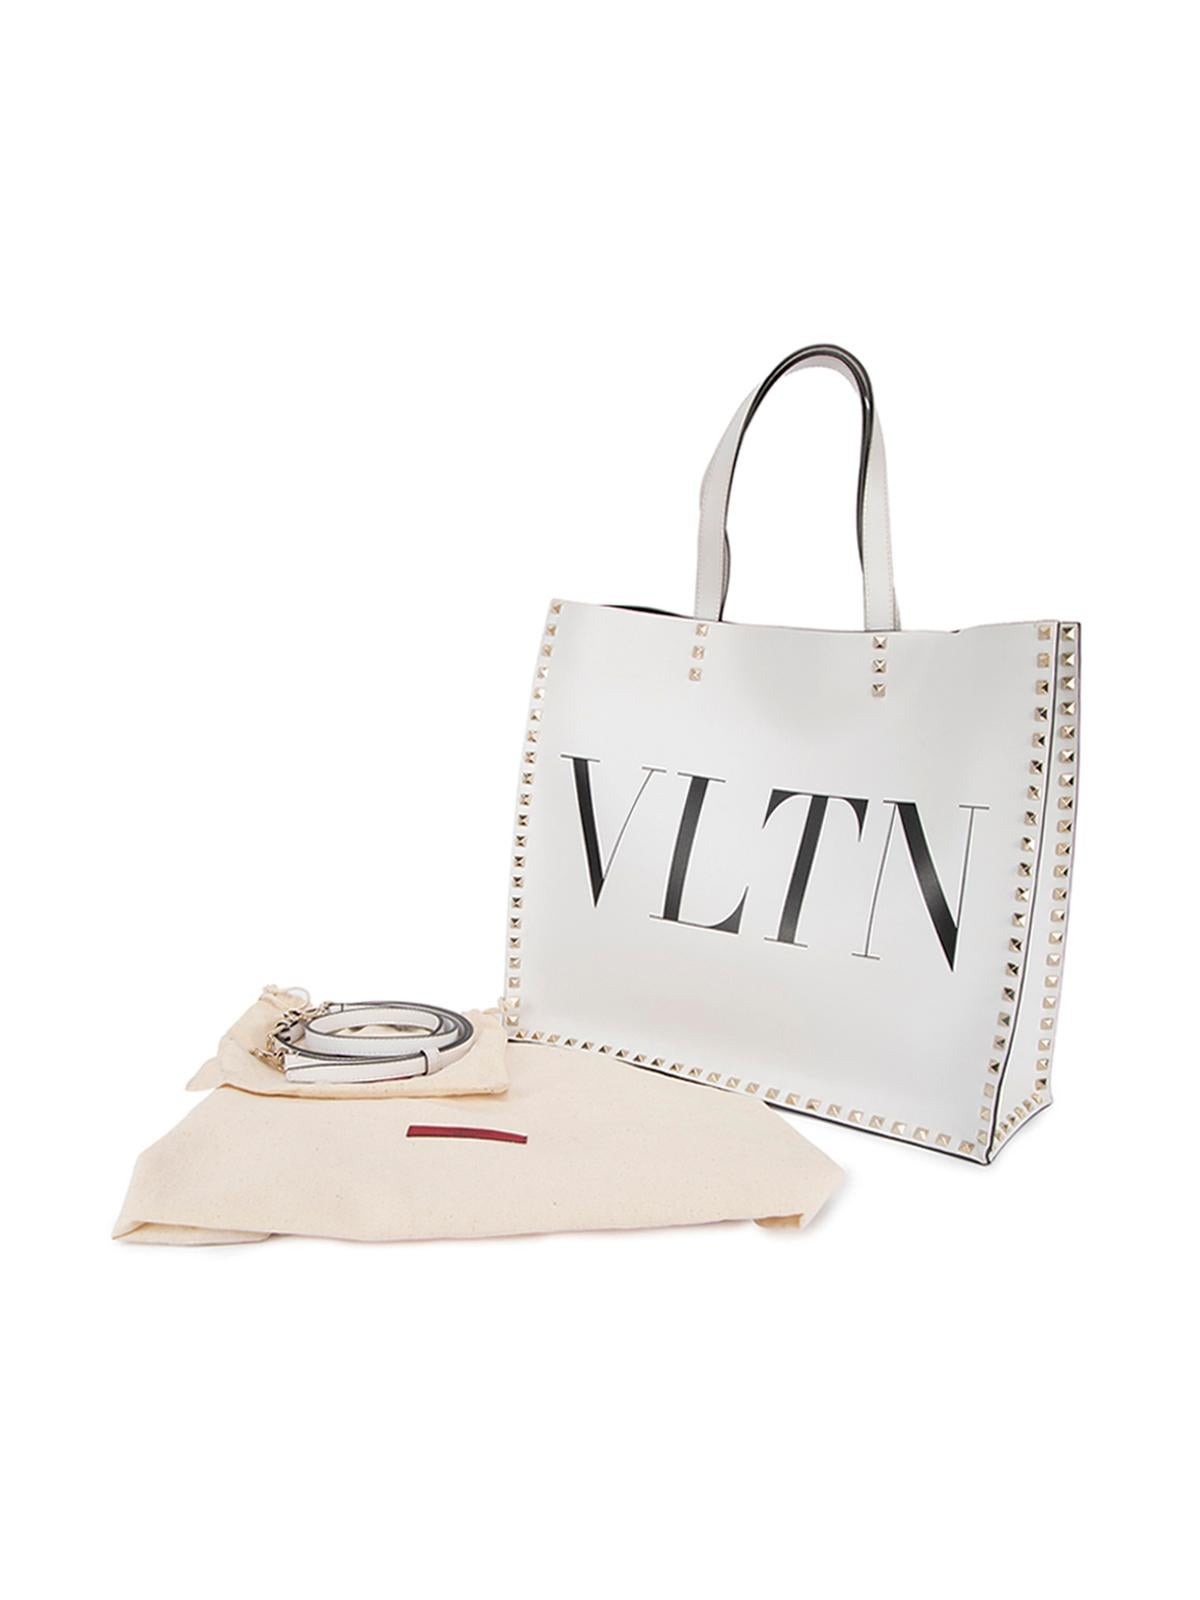 Pre-Loved Valentino Garavani Women's White Leather Rockstud VLTN Tote Bag 1